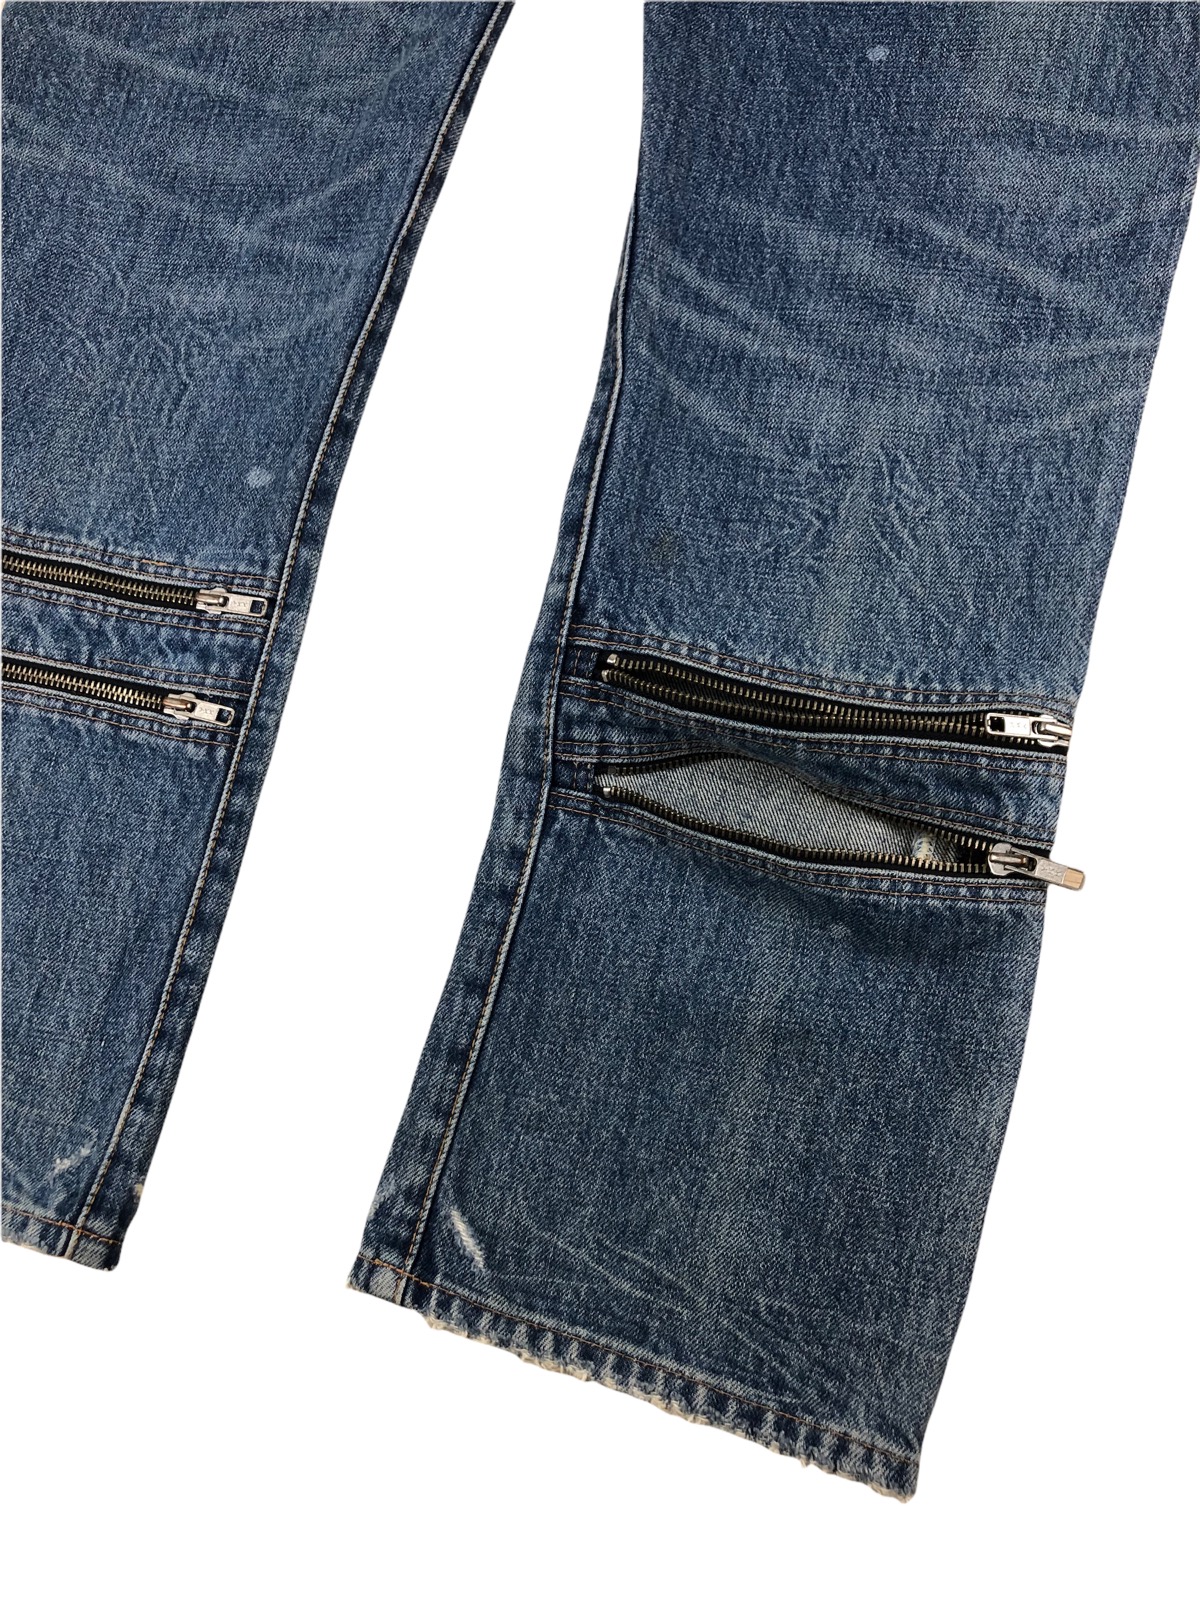 1990s RNA Multi zipper Seditionaries Punk Style Jeans - 9